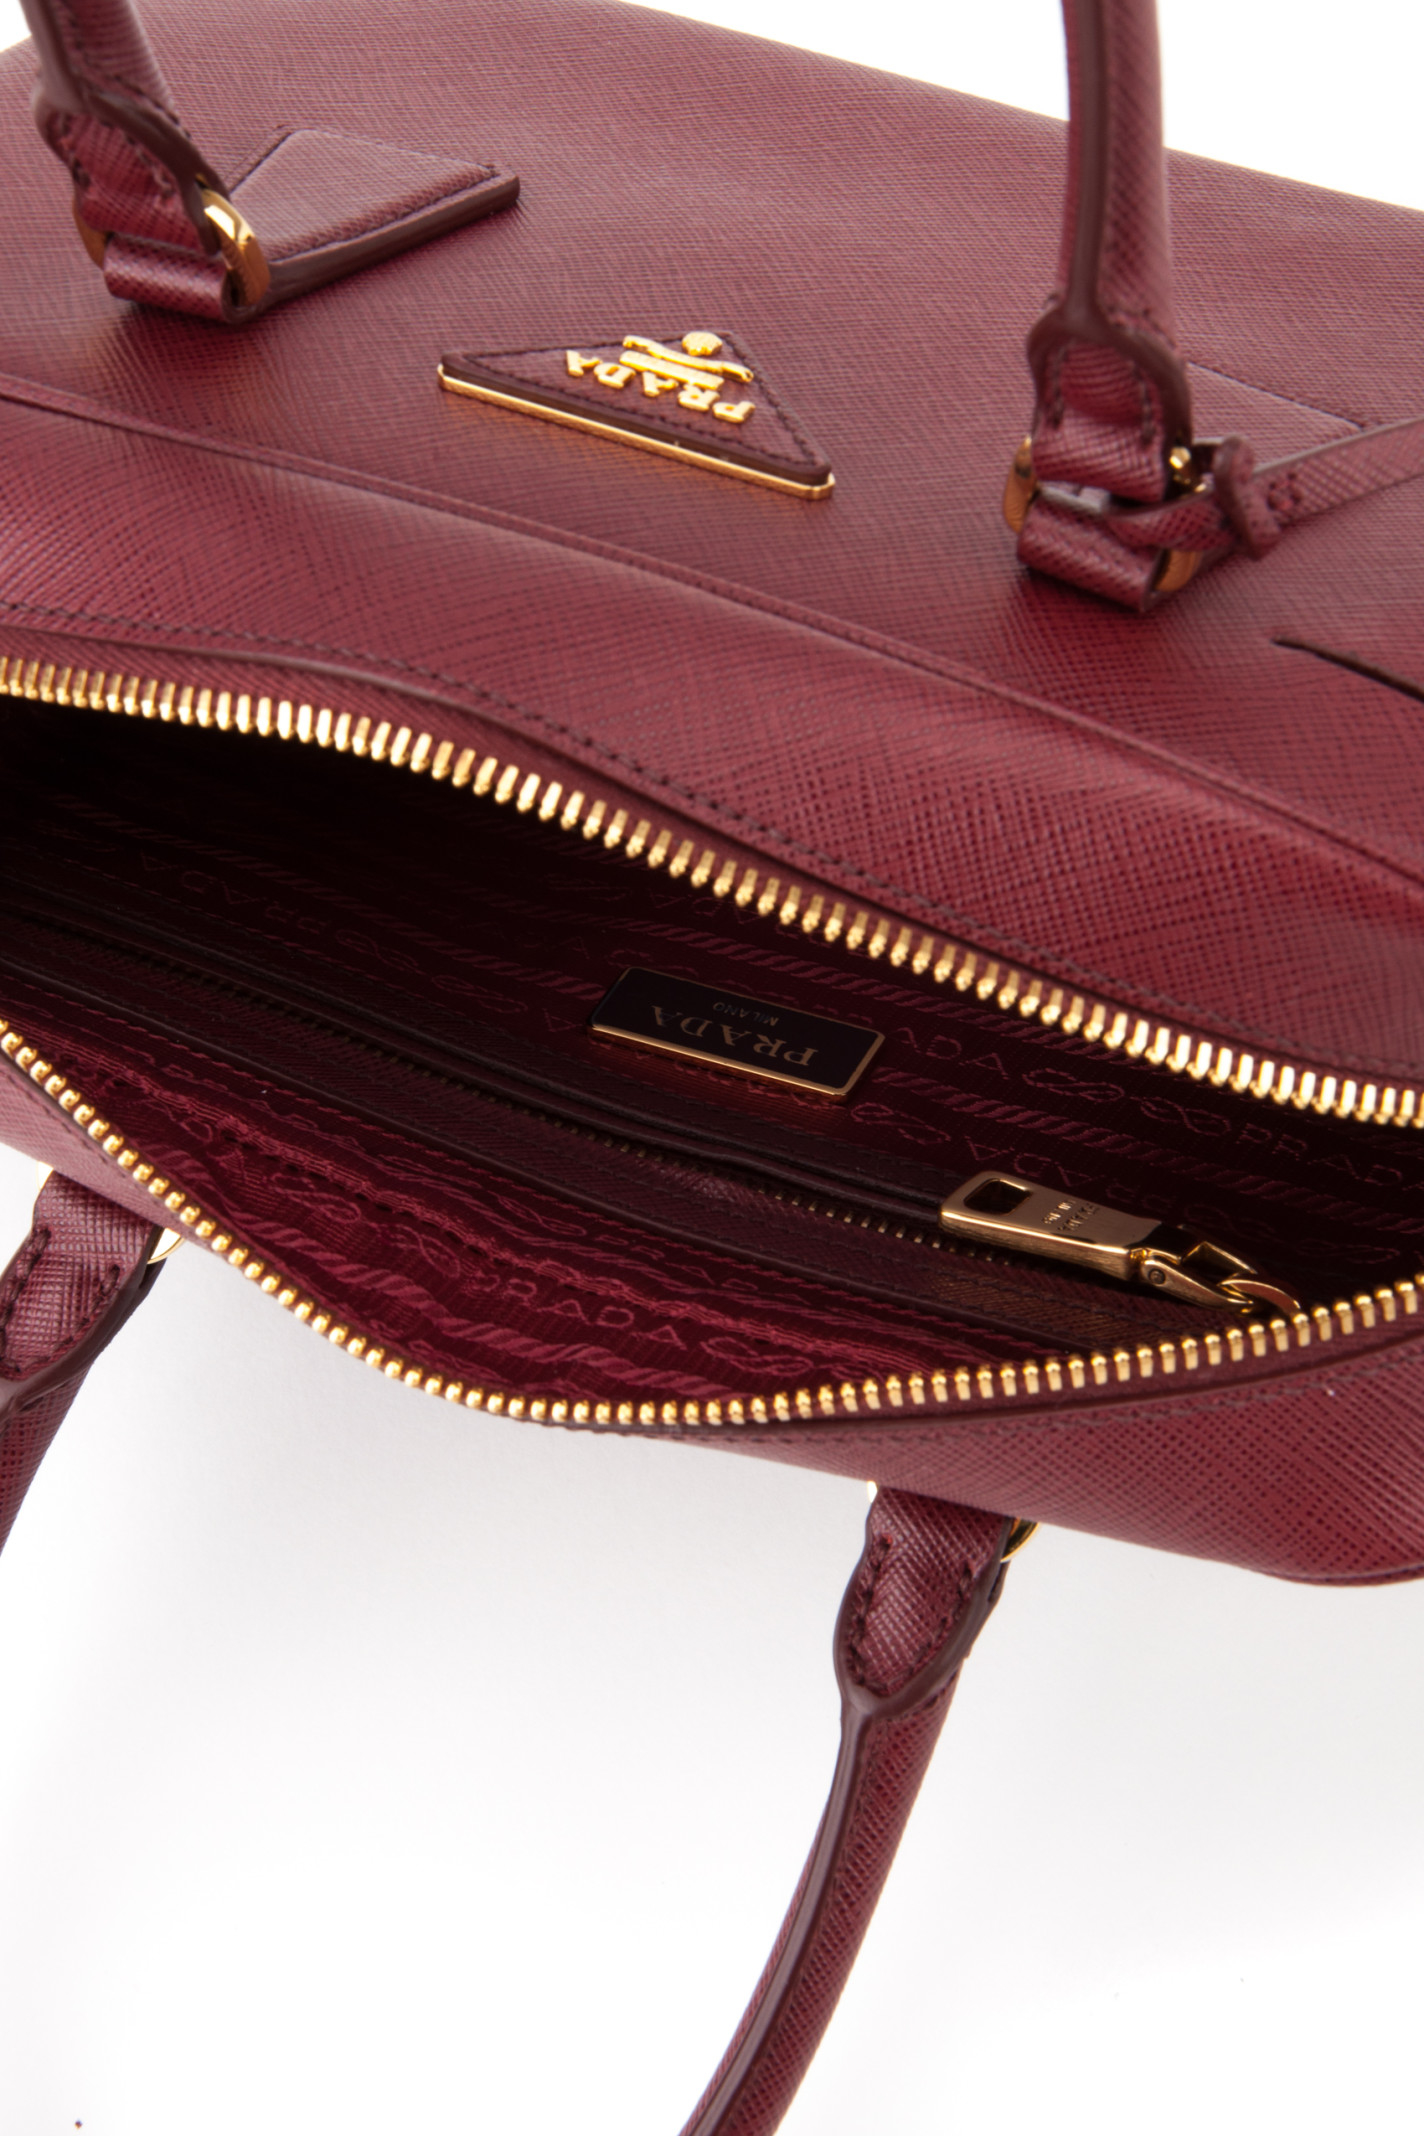 Prada Saffiano Lux Bowling Bag in Red (CERISE) | Lyst  